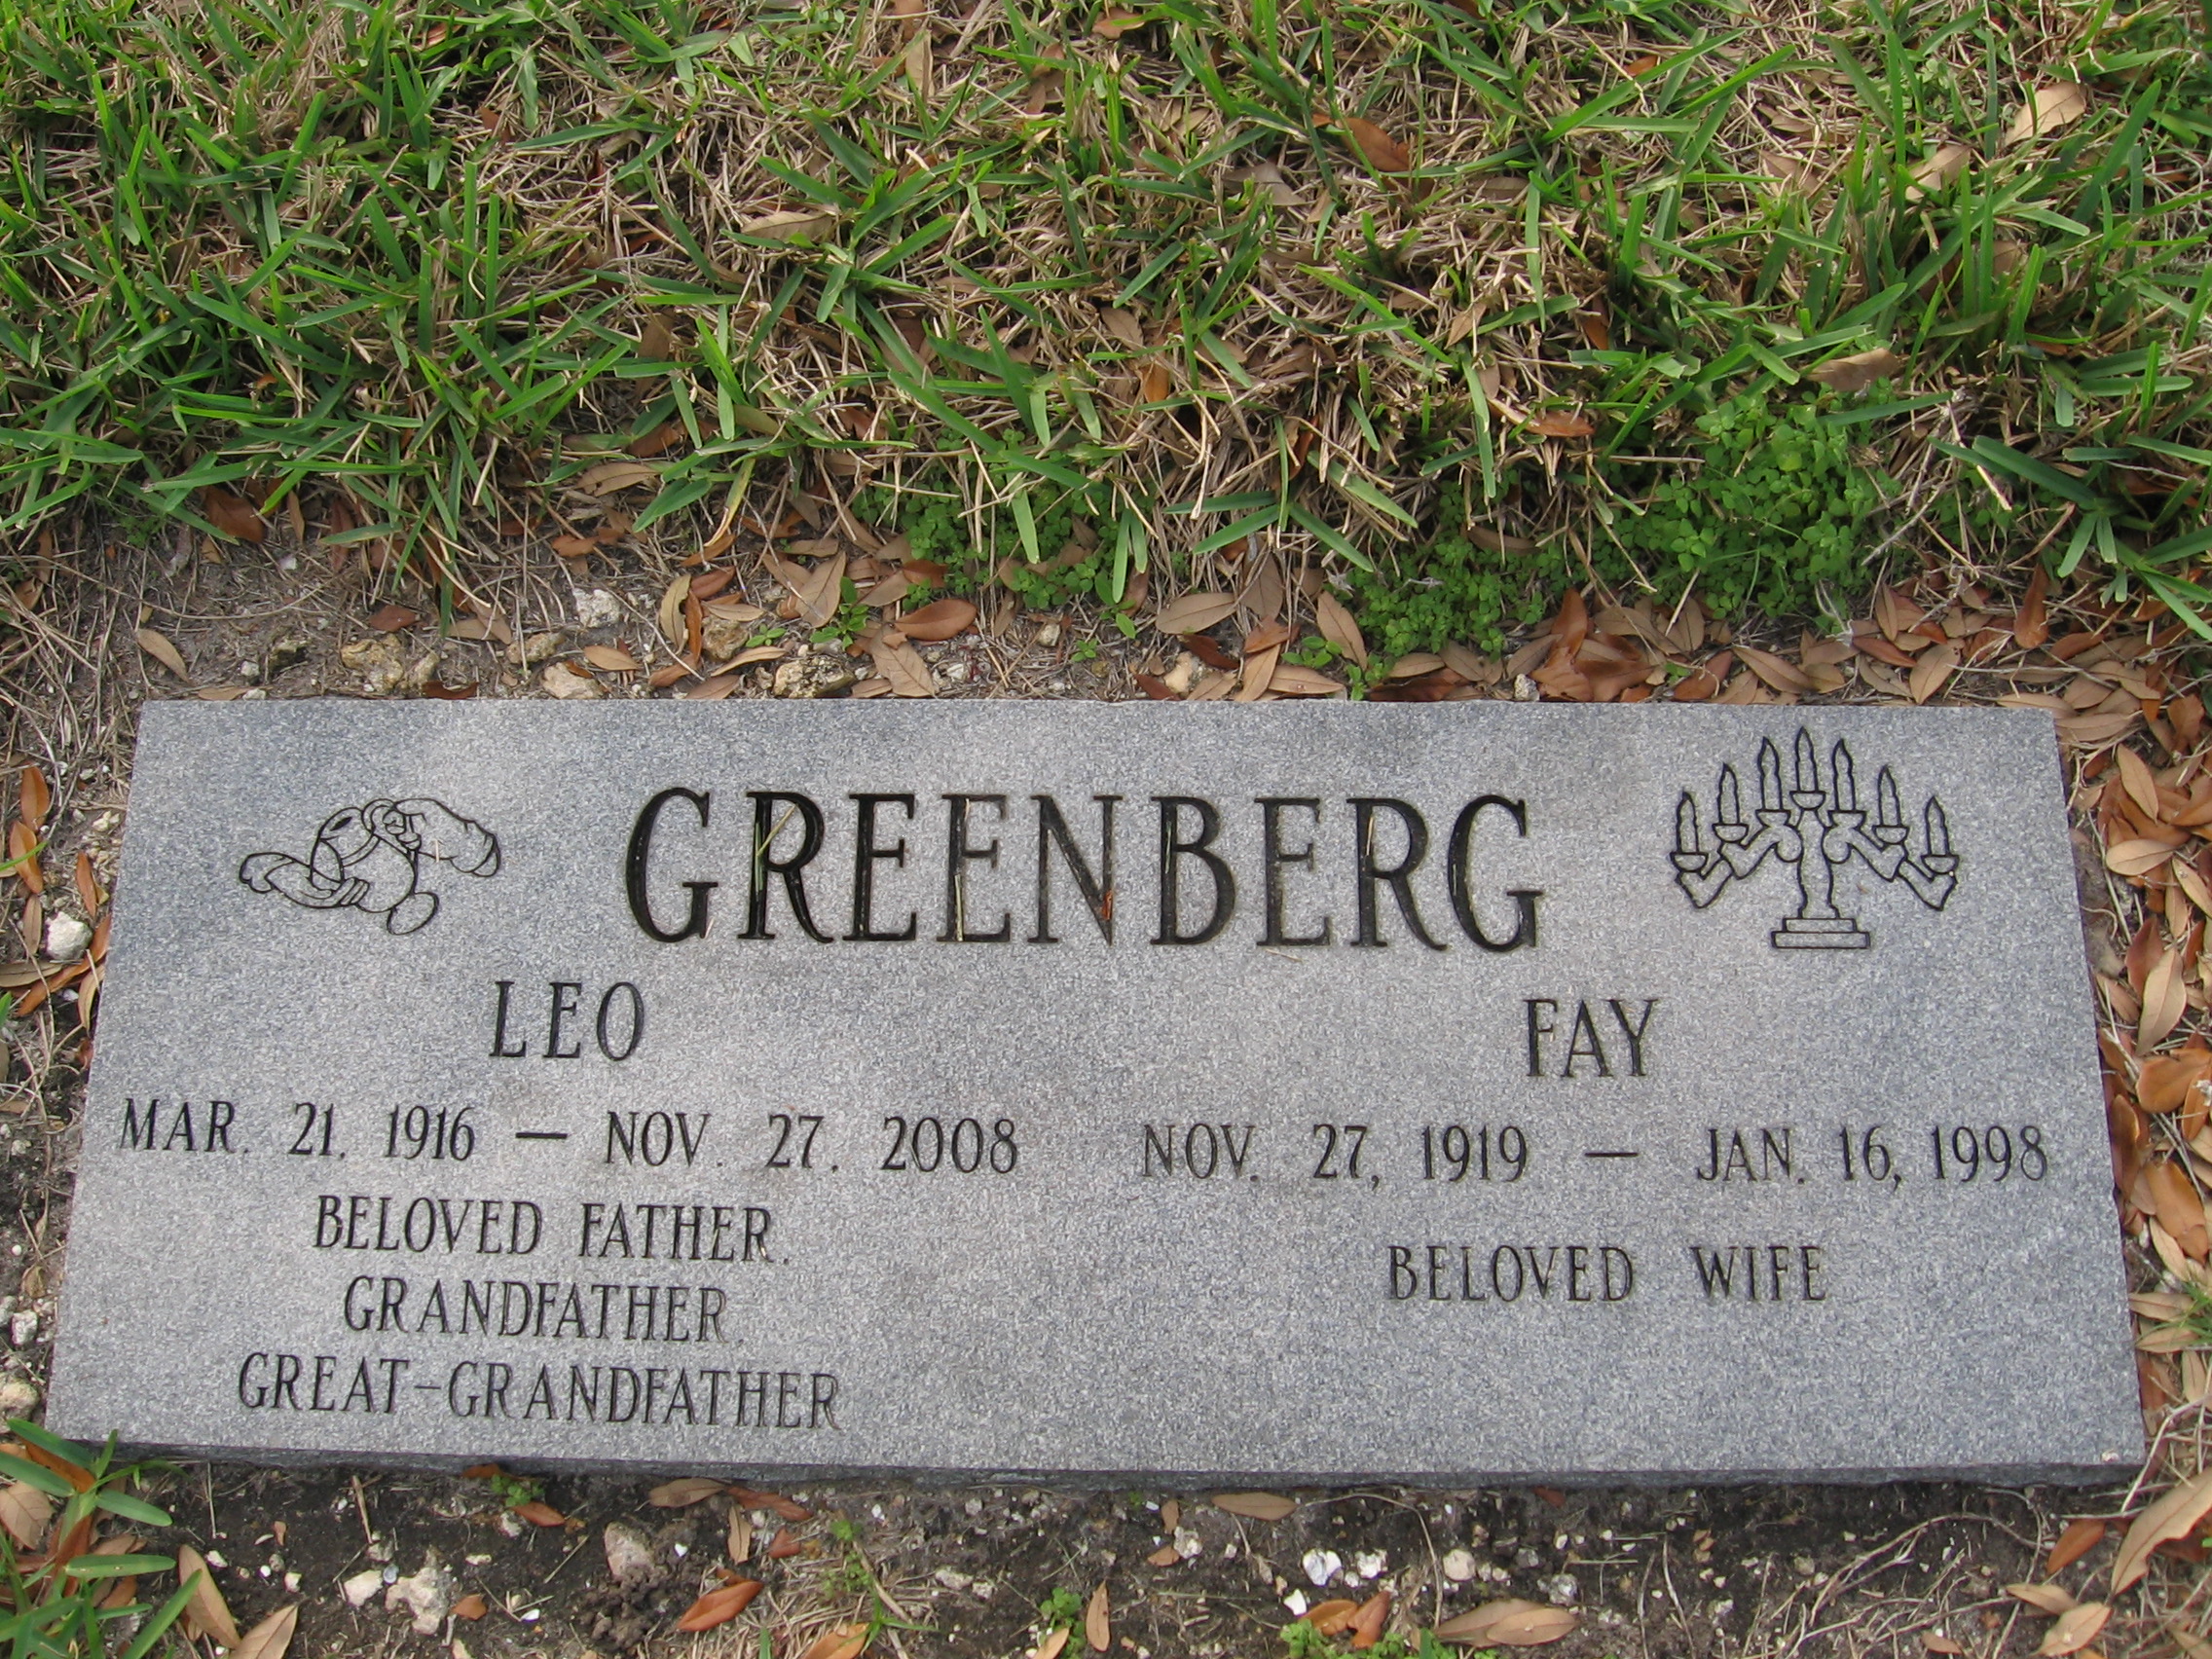 Leo Greenberg